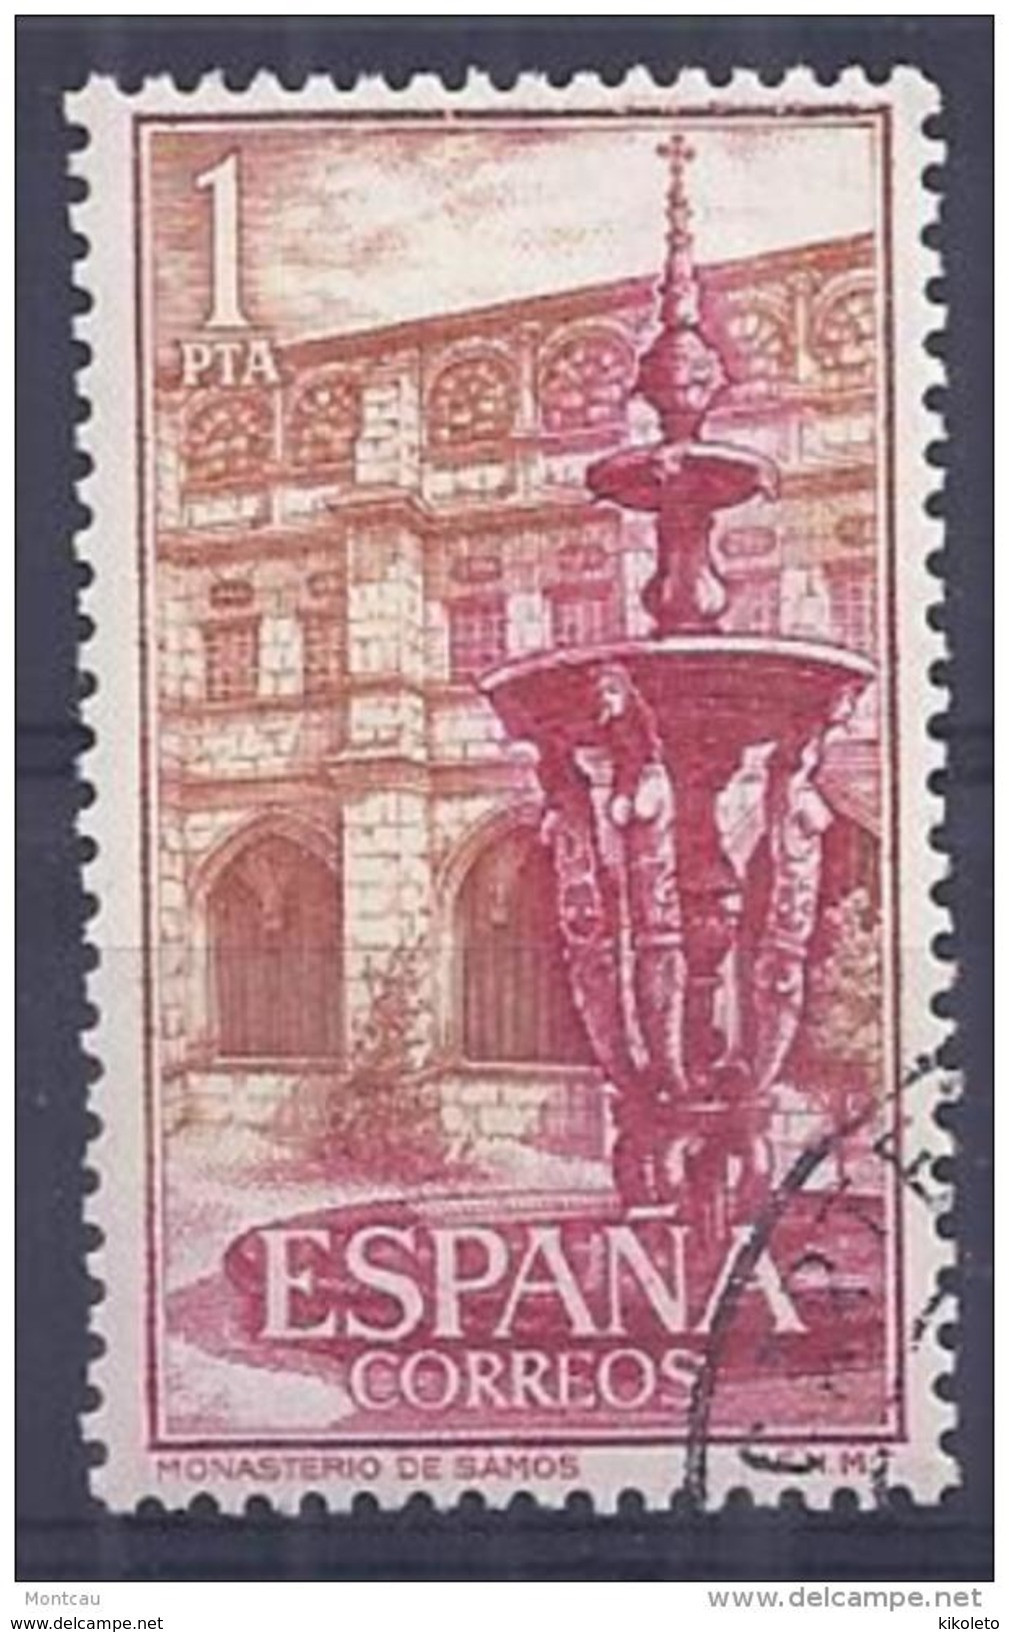 ESPAÑA SPAIN AÑO YEAR 1960 EDIFIL Nº 1323 - USADO (o) USED (o) - REAL MONASTERIO DE SAMOS - 1 Pta - Usados